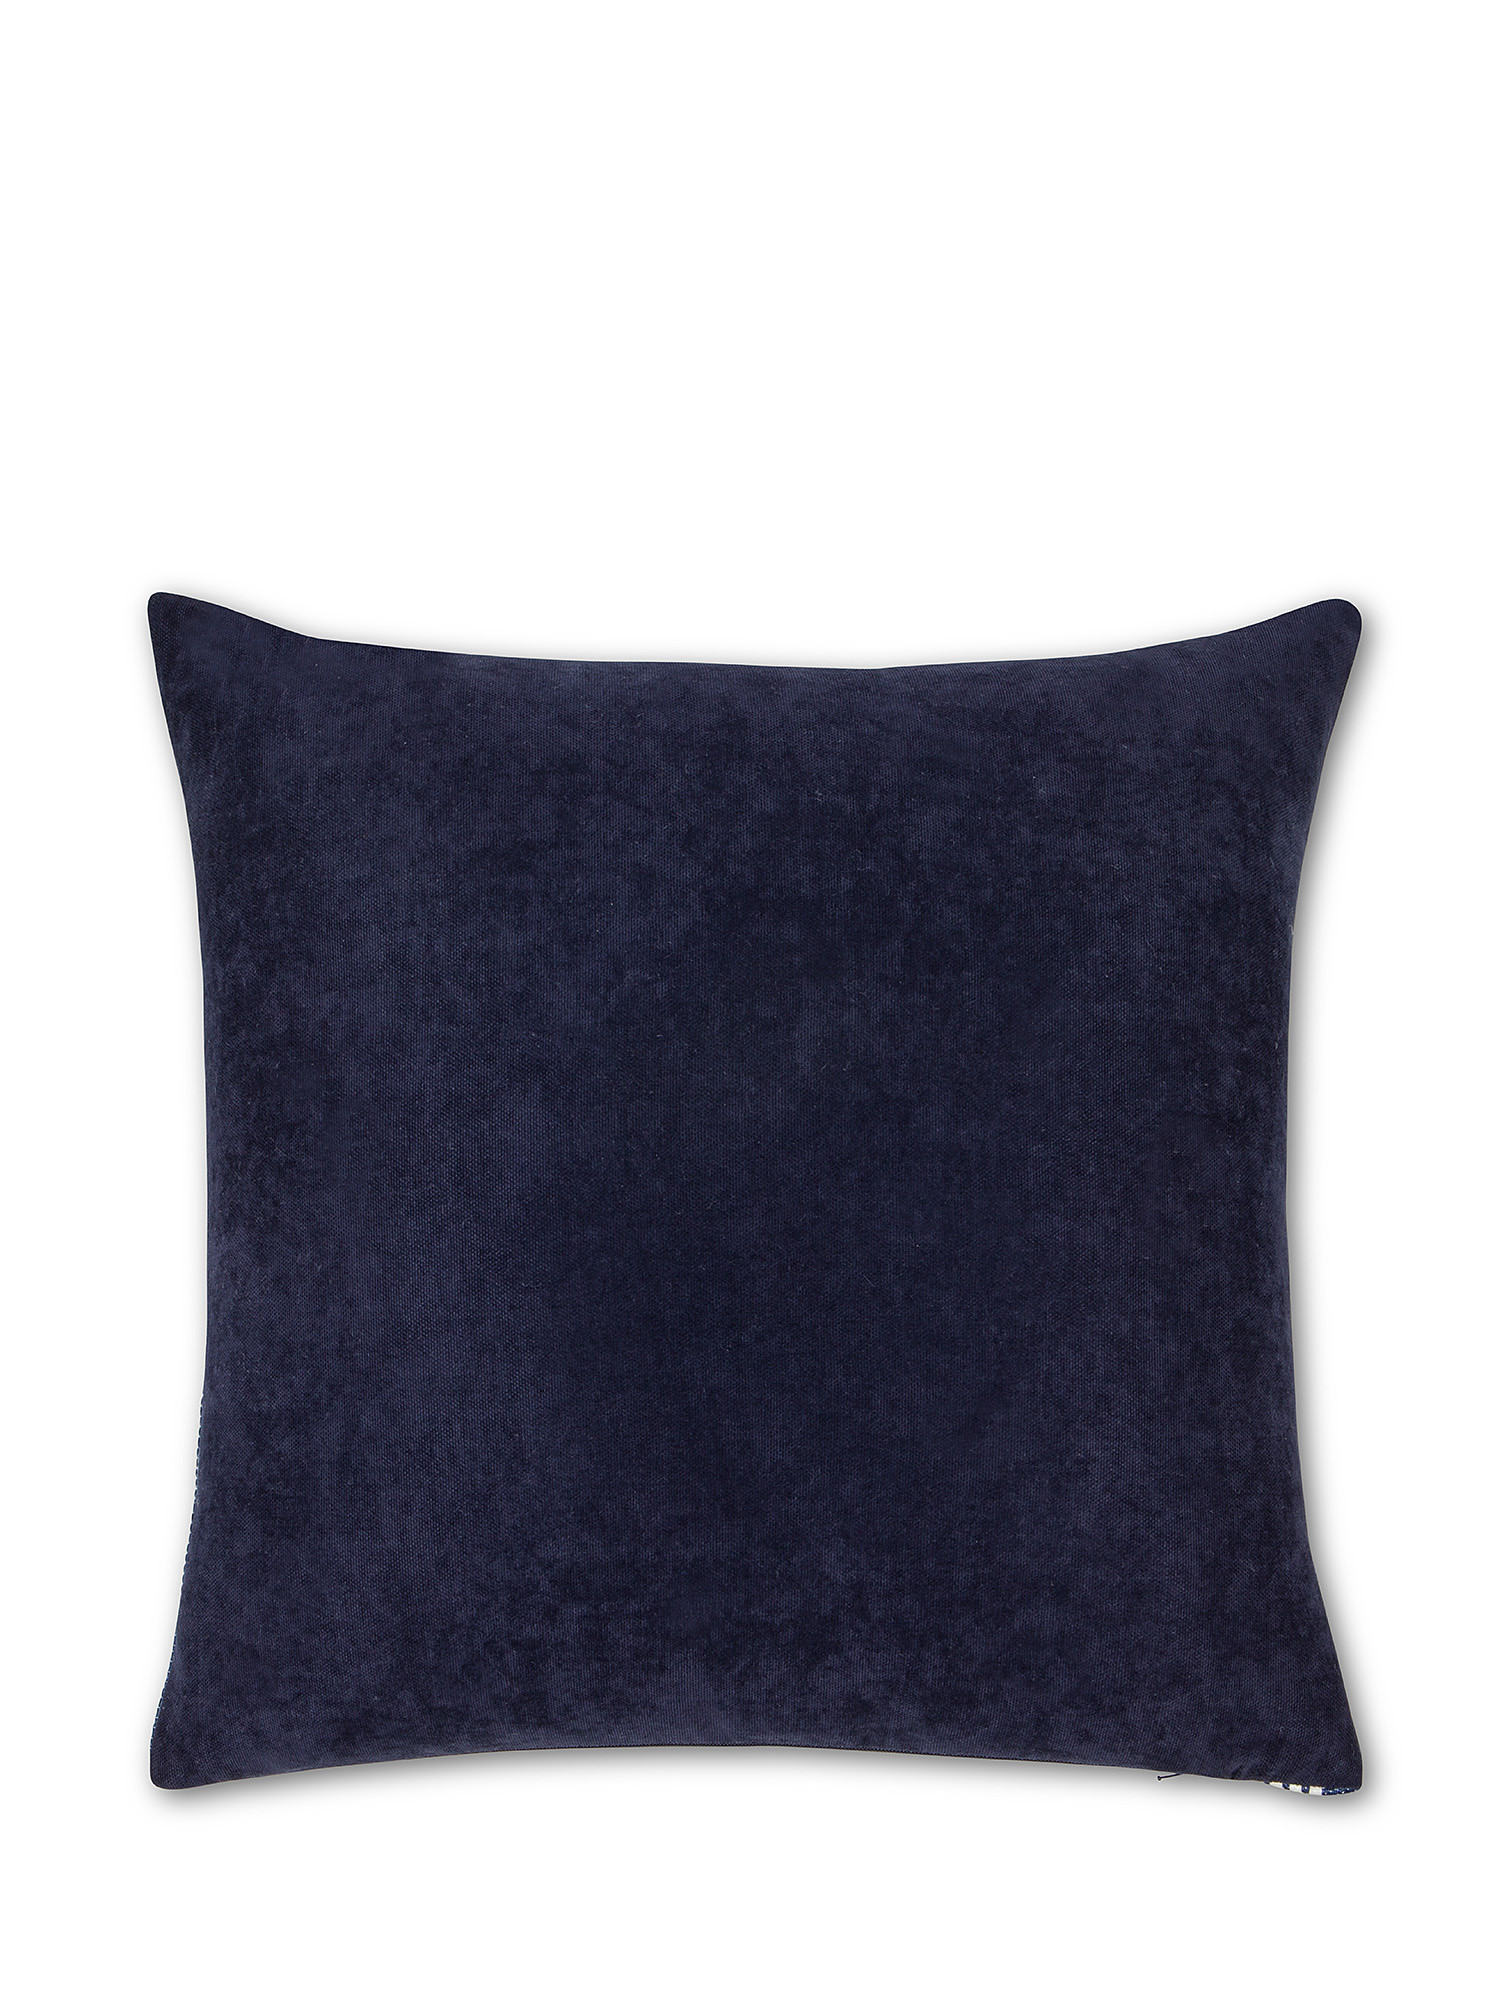 Cuscino 43x43 cm  in cotone e lino, Blu, large image number 1